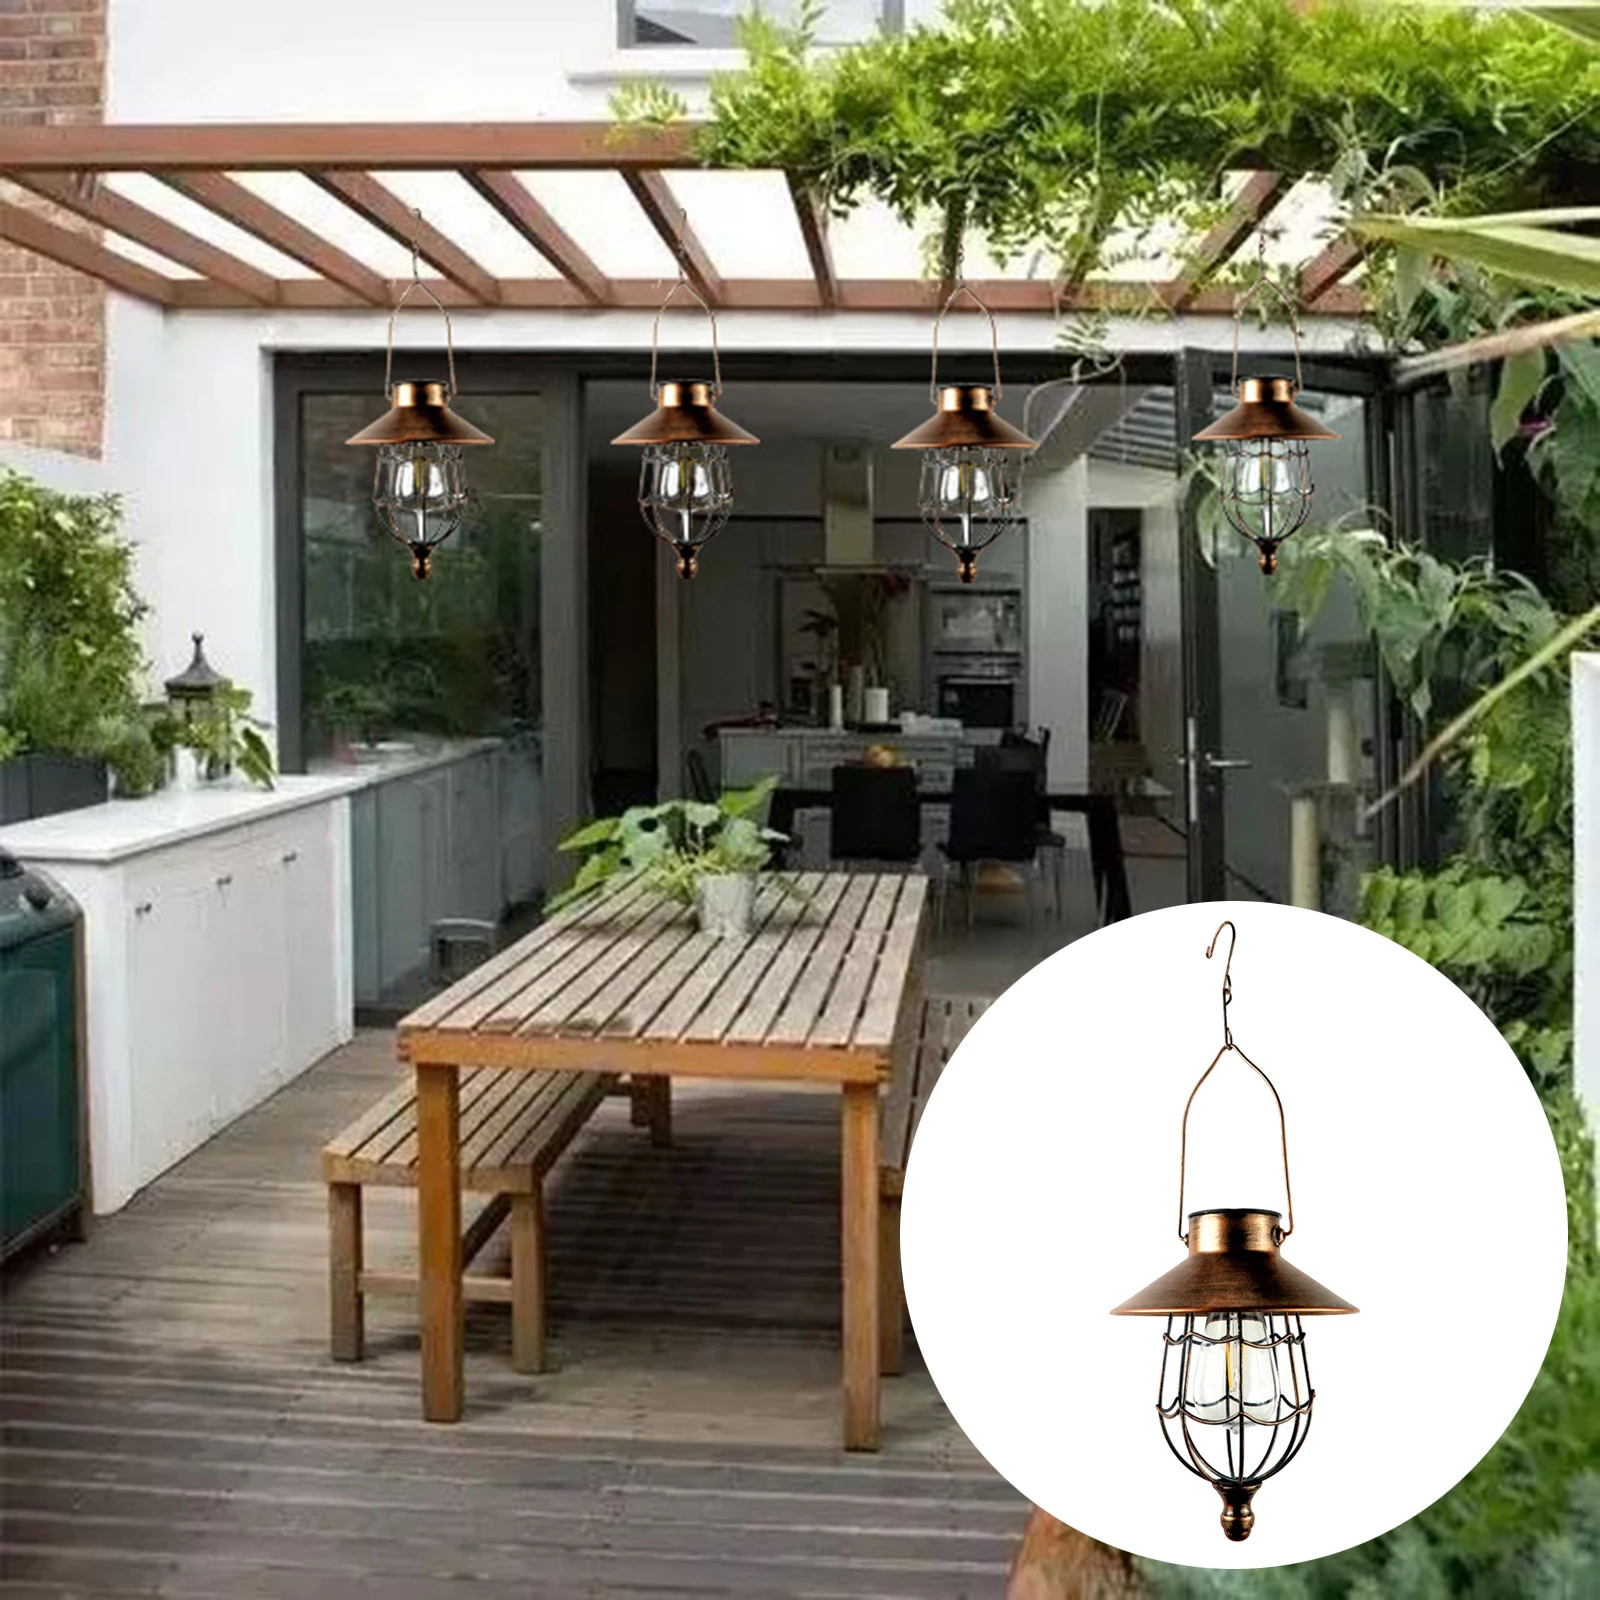 Vintage Style Solar Lantern Hanging Lamp Light Metal for Garden Decoration